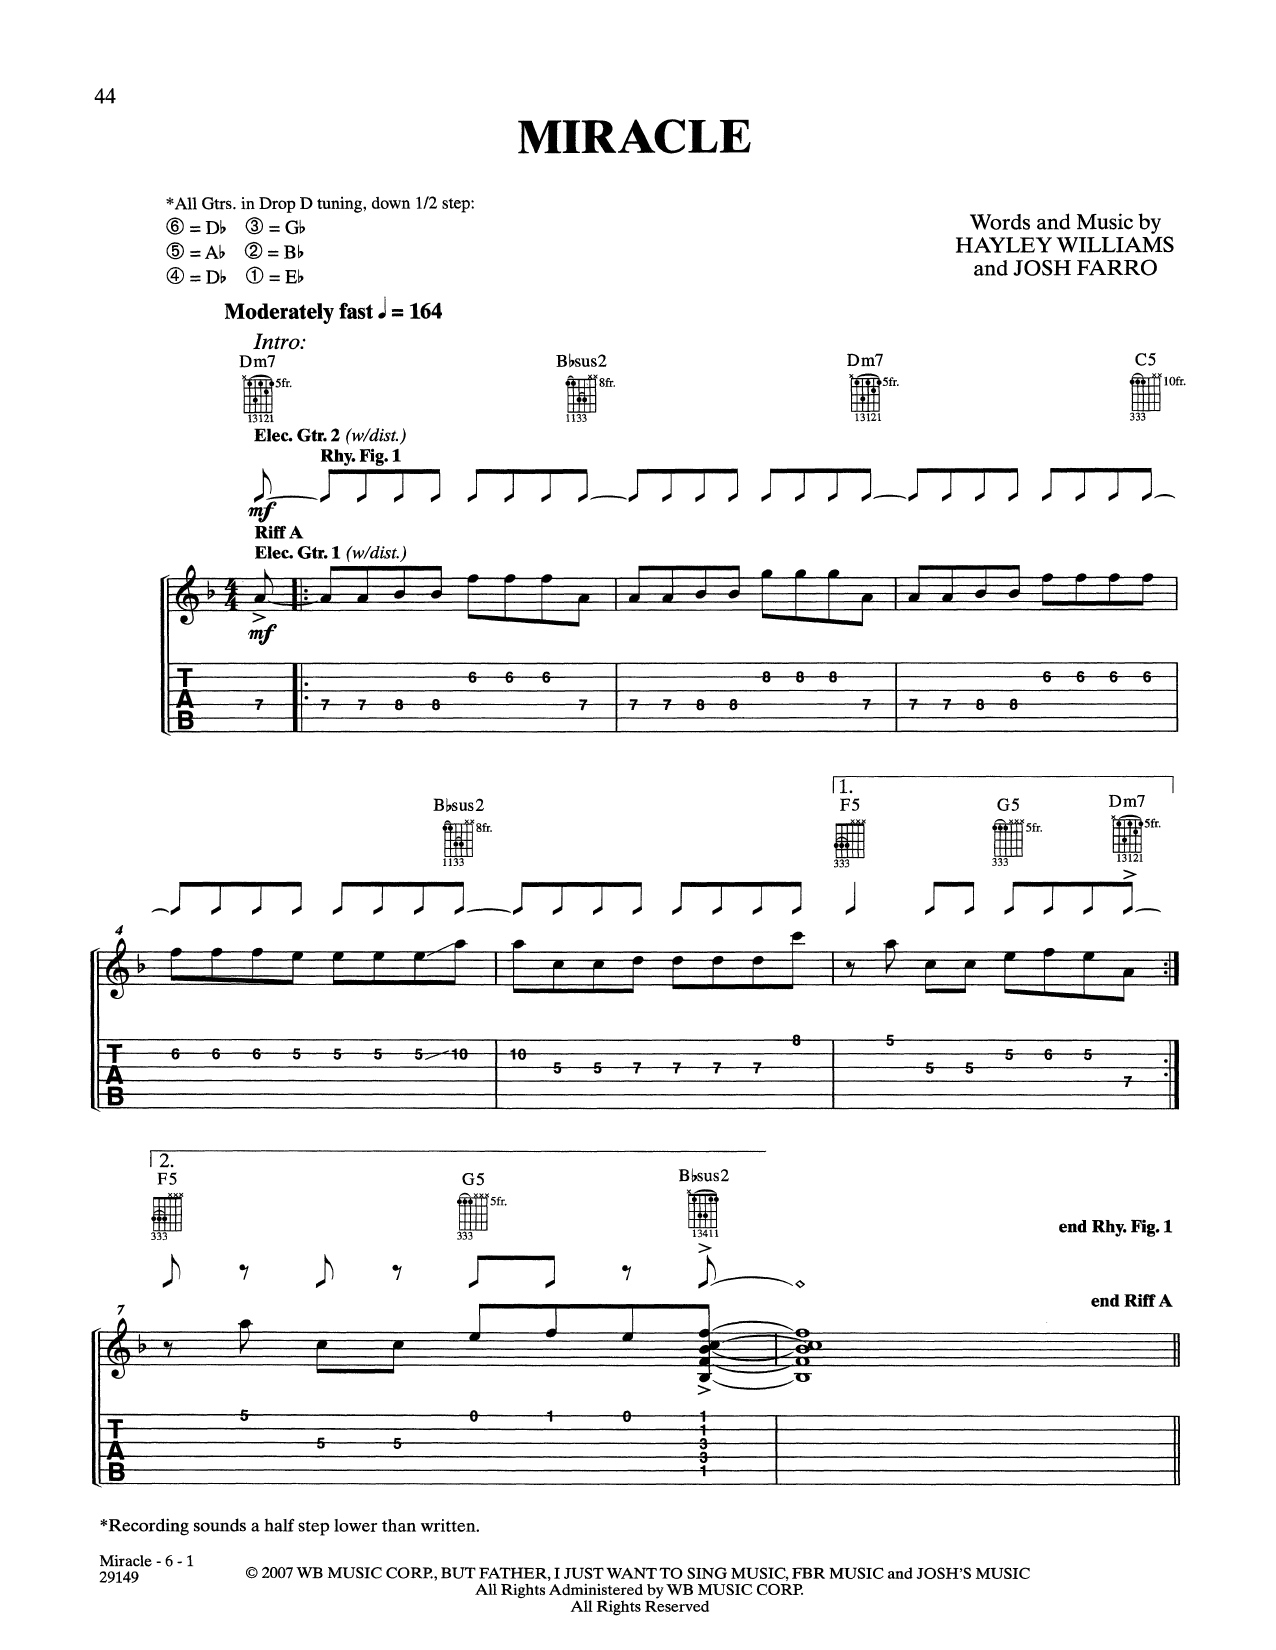 Paramore Miracle Sheet Music Notes & Chords for Guitar Tab - Download or Print PDF